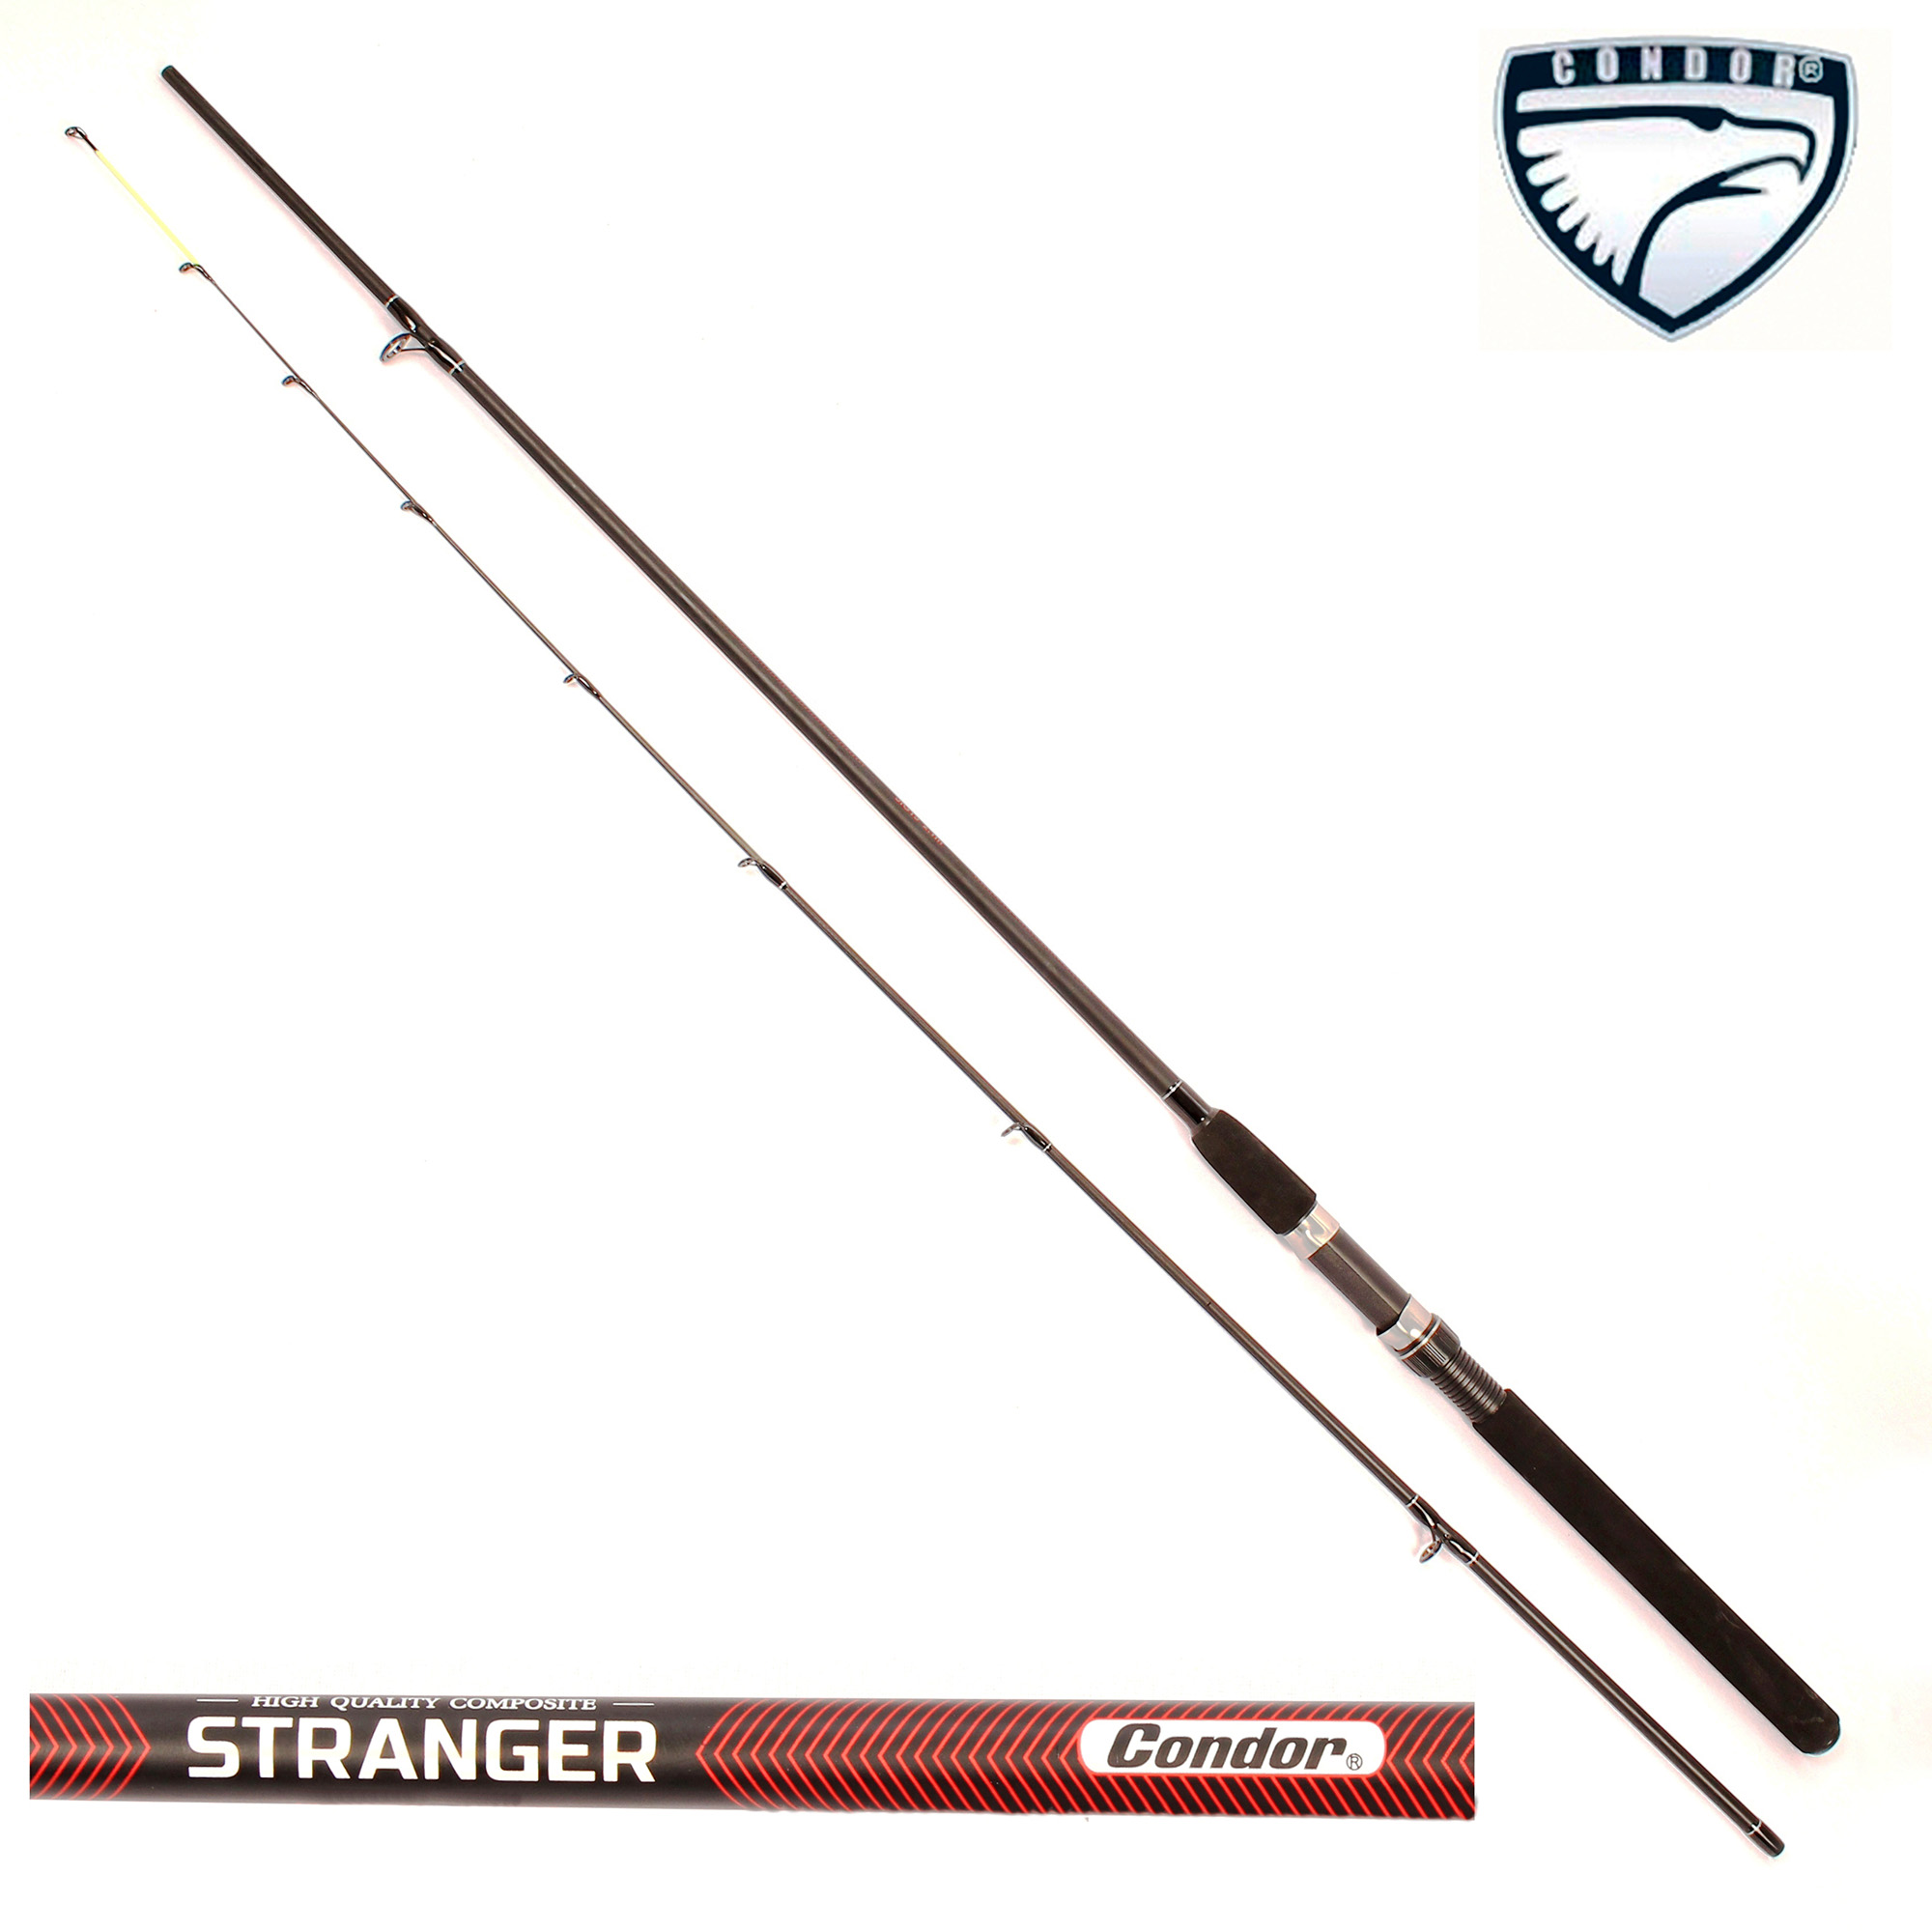 Спиннинг Condor Stranger Jig15 длина 2,70 м, тест 3-15 гр, композит, штекер